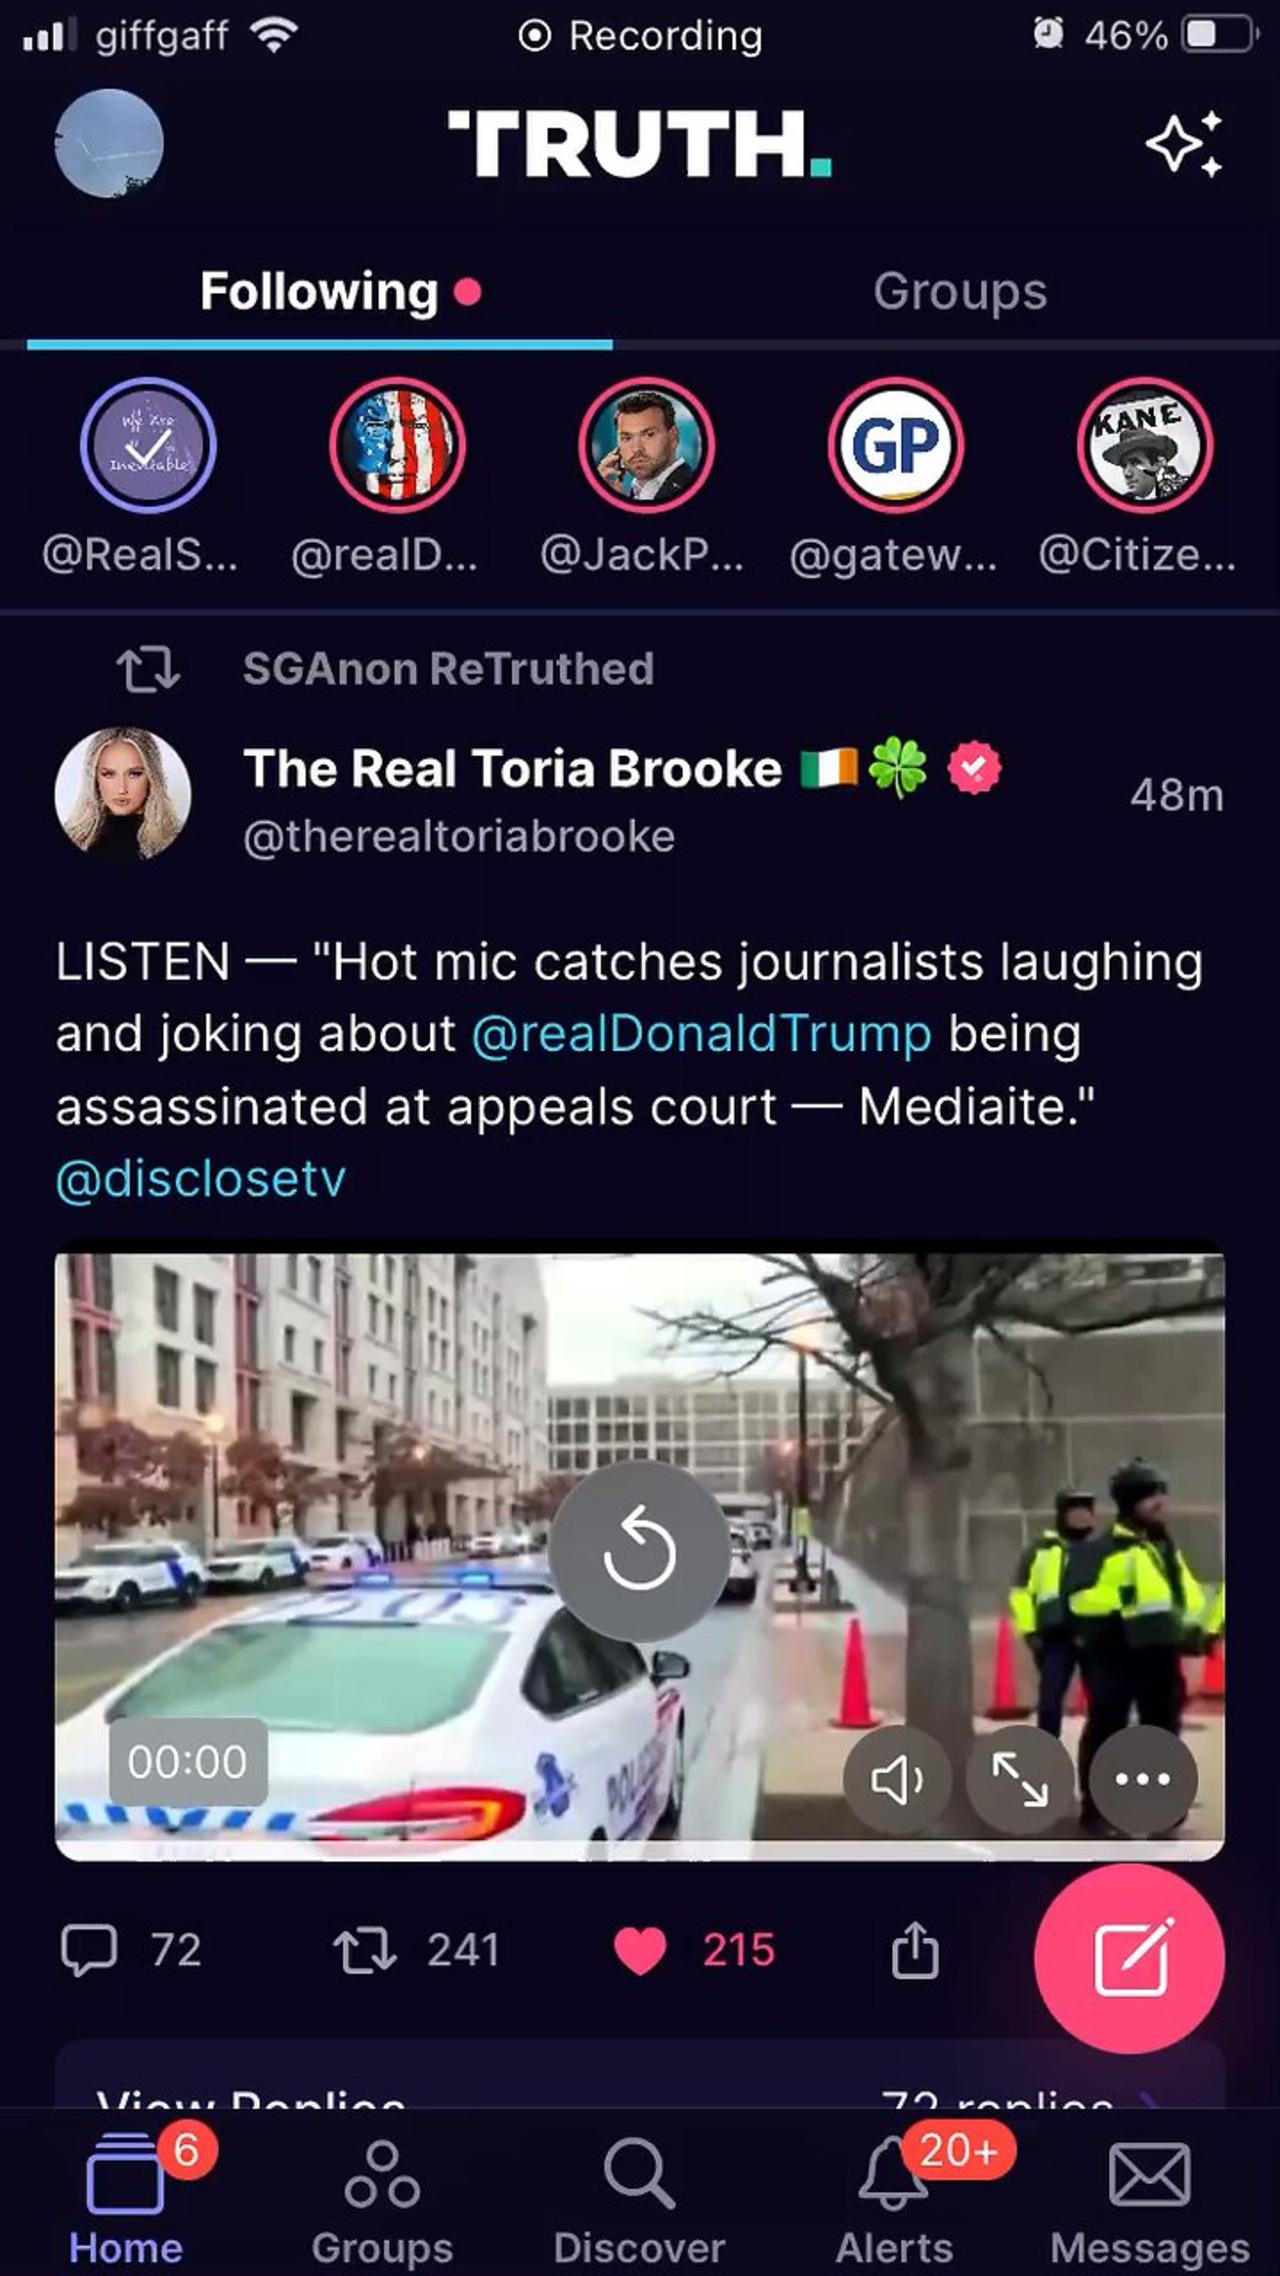 Hot mic caught journalists : Trump trial : JFK assassination